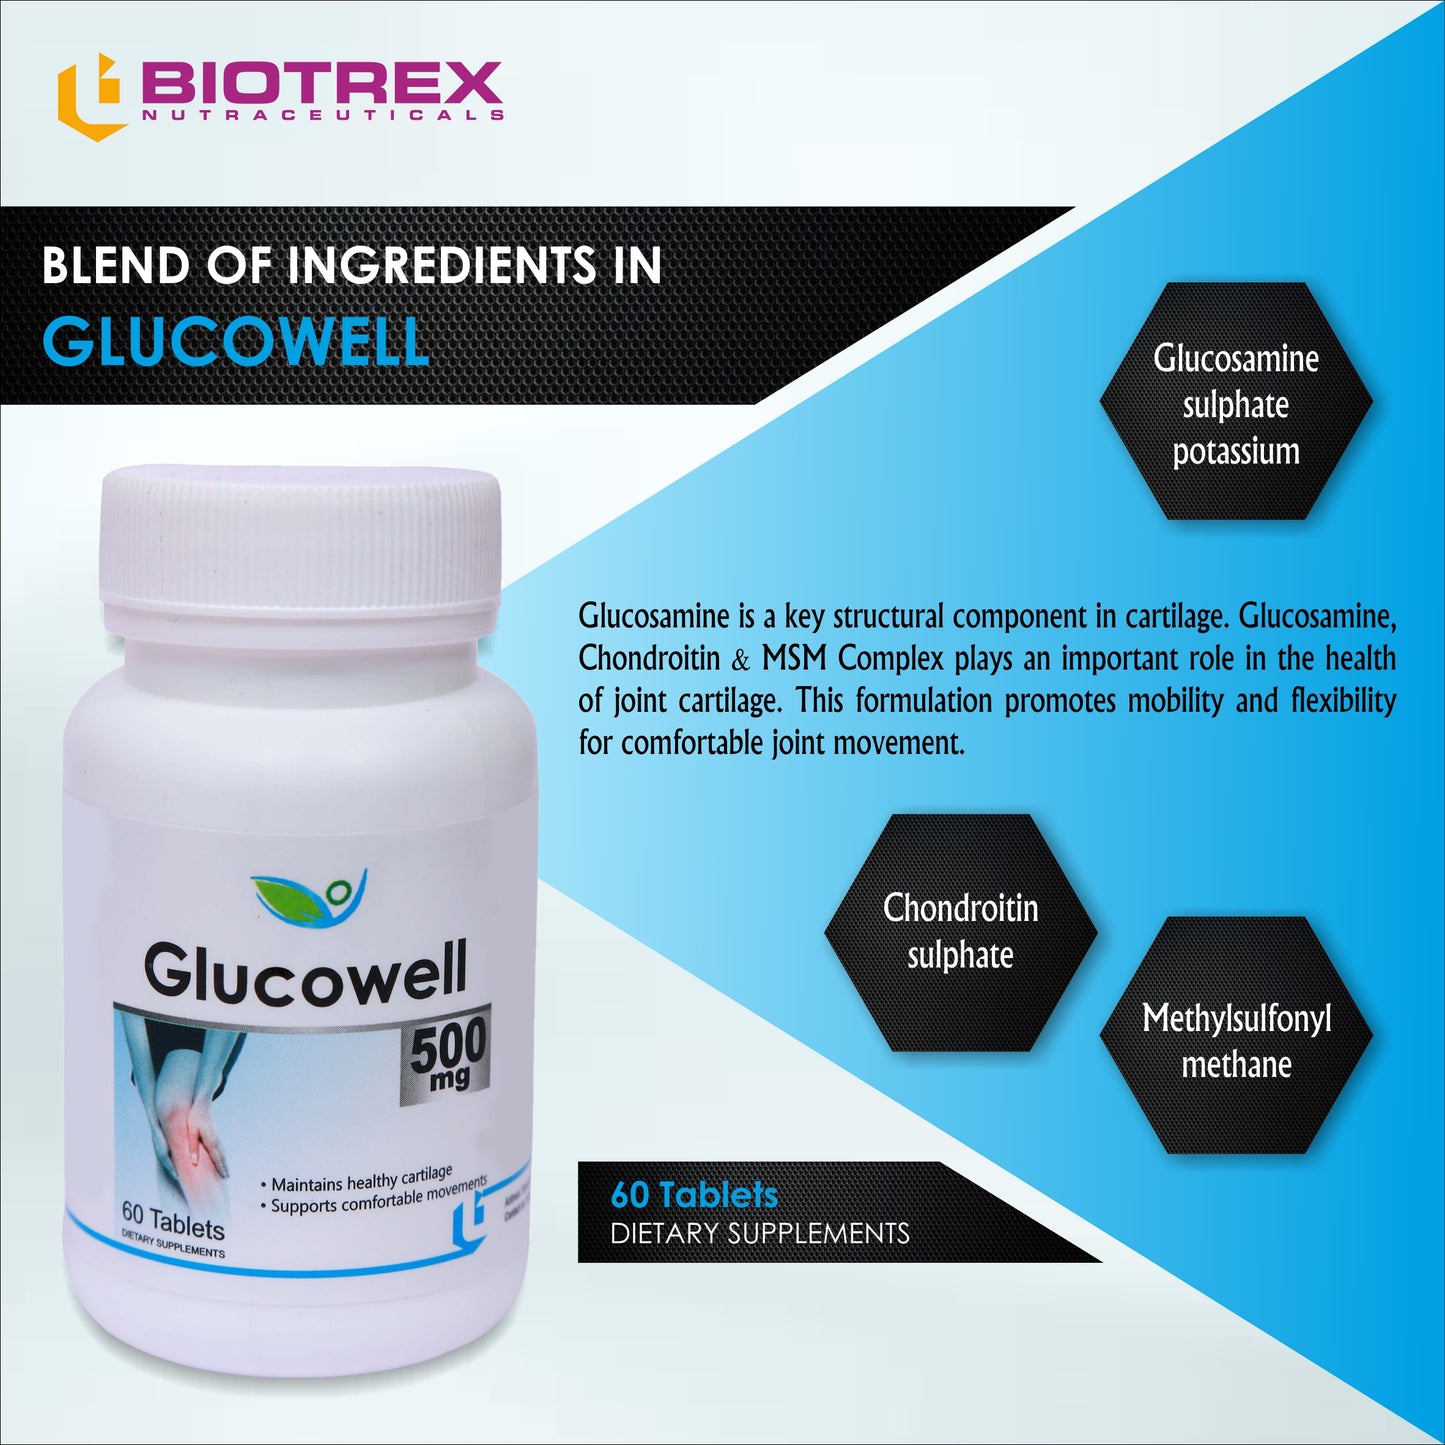 Biotrex Glucowell 500mg - 60 Tablets